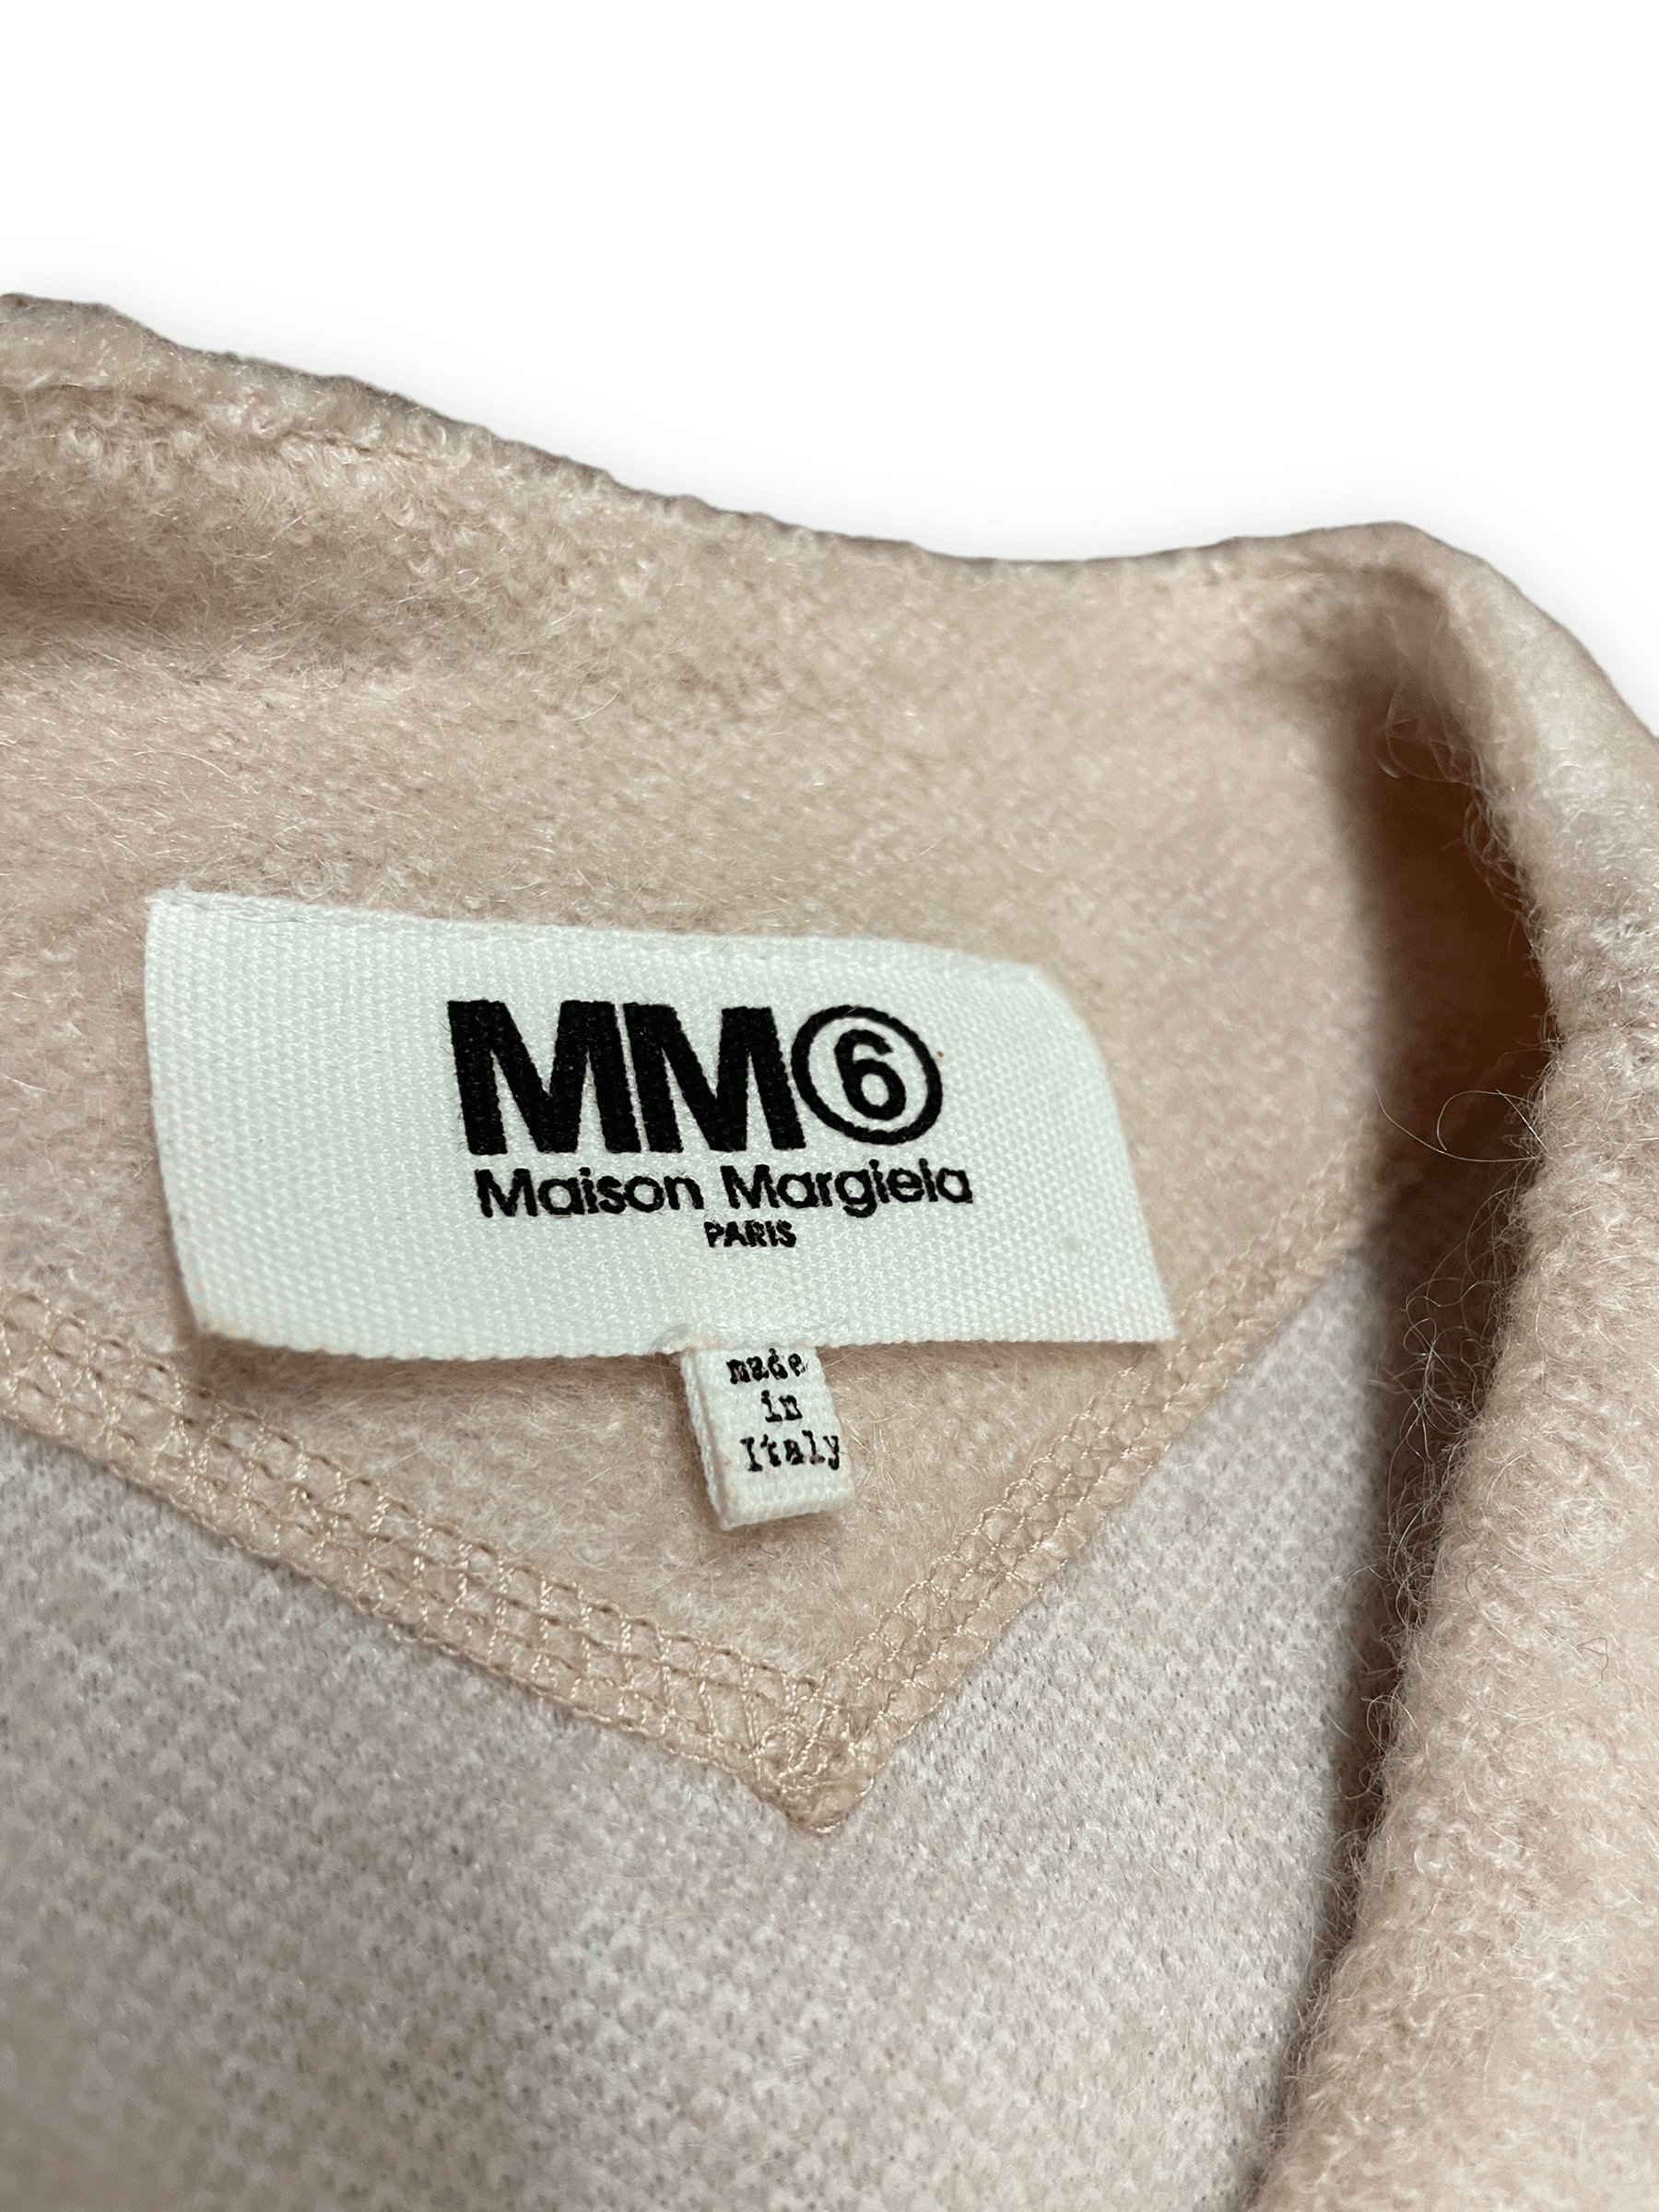 MM6 Maison Margiela Vintage Designer Hi-Low Fuzzy Knit Top with